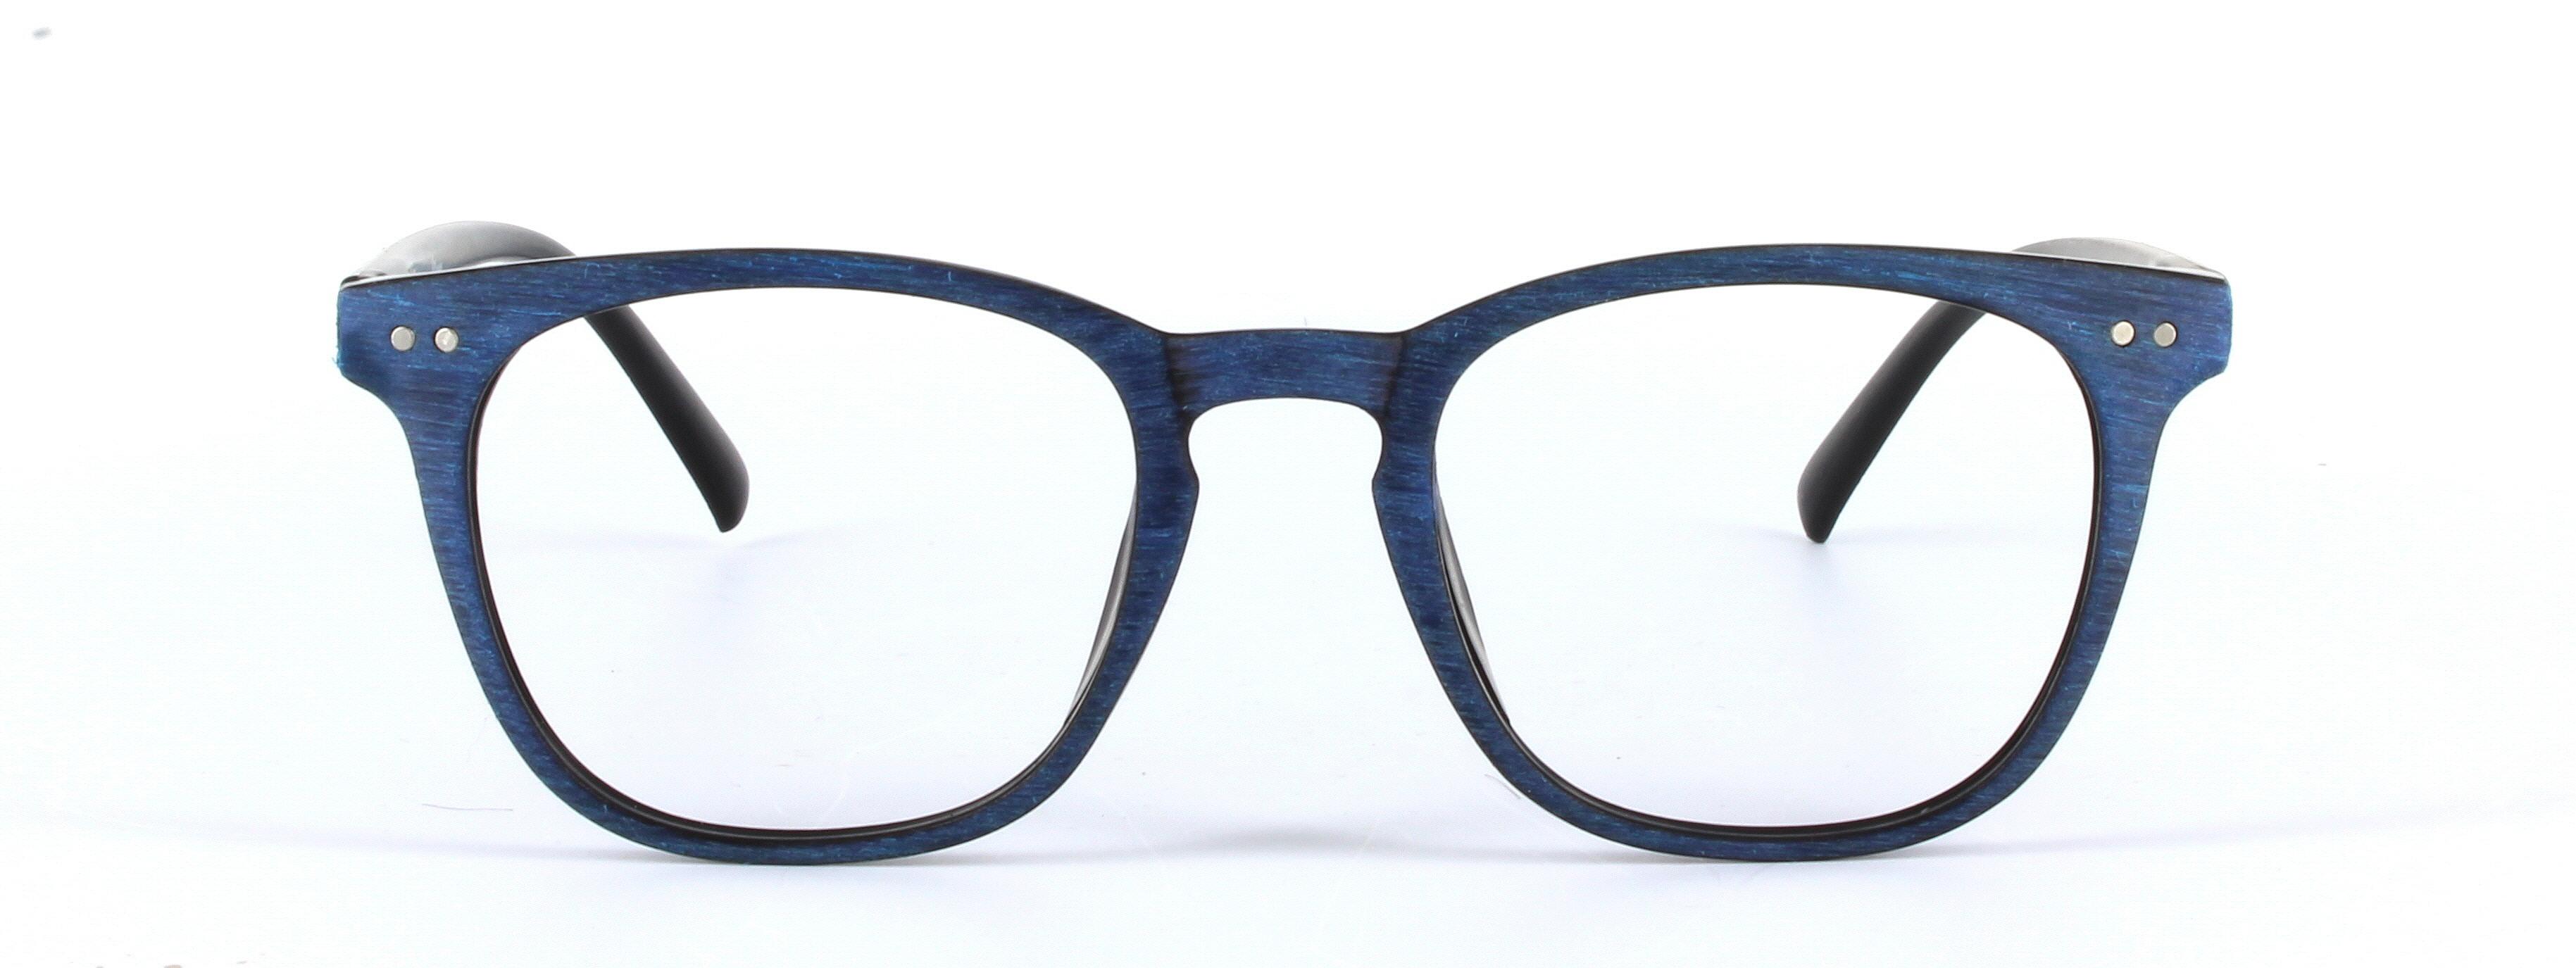 Aubrey Blue Full Rim Oval Round Plastic Glasses - Image View 5